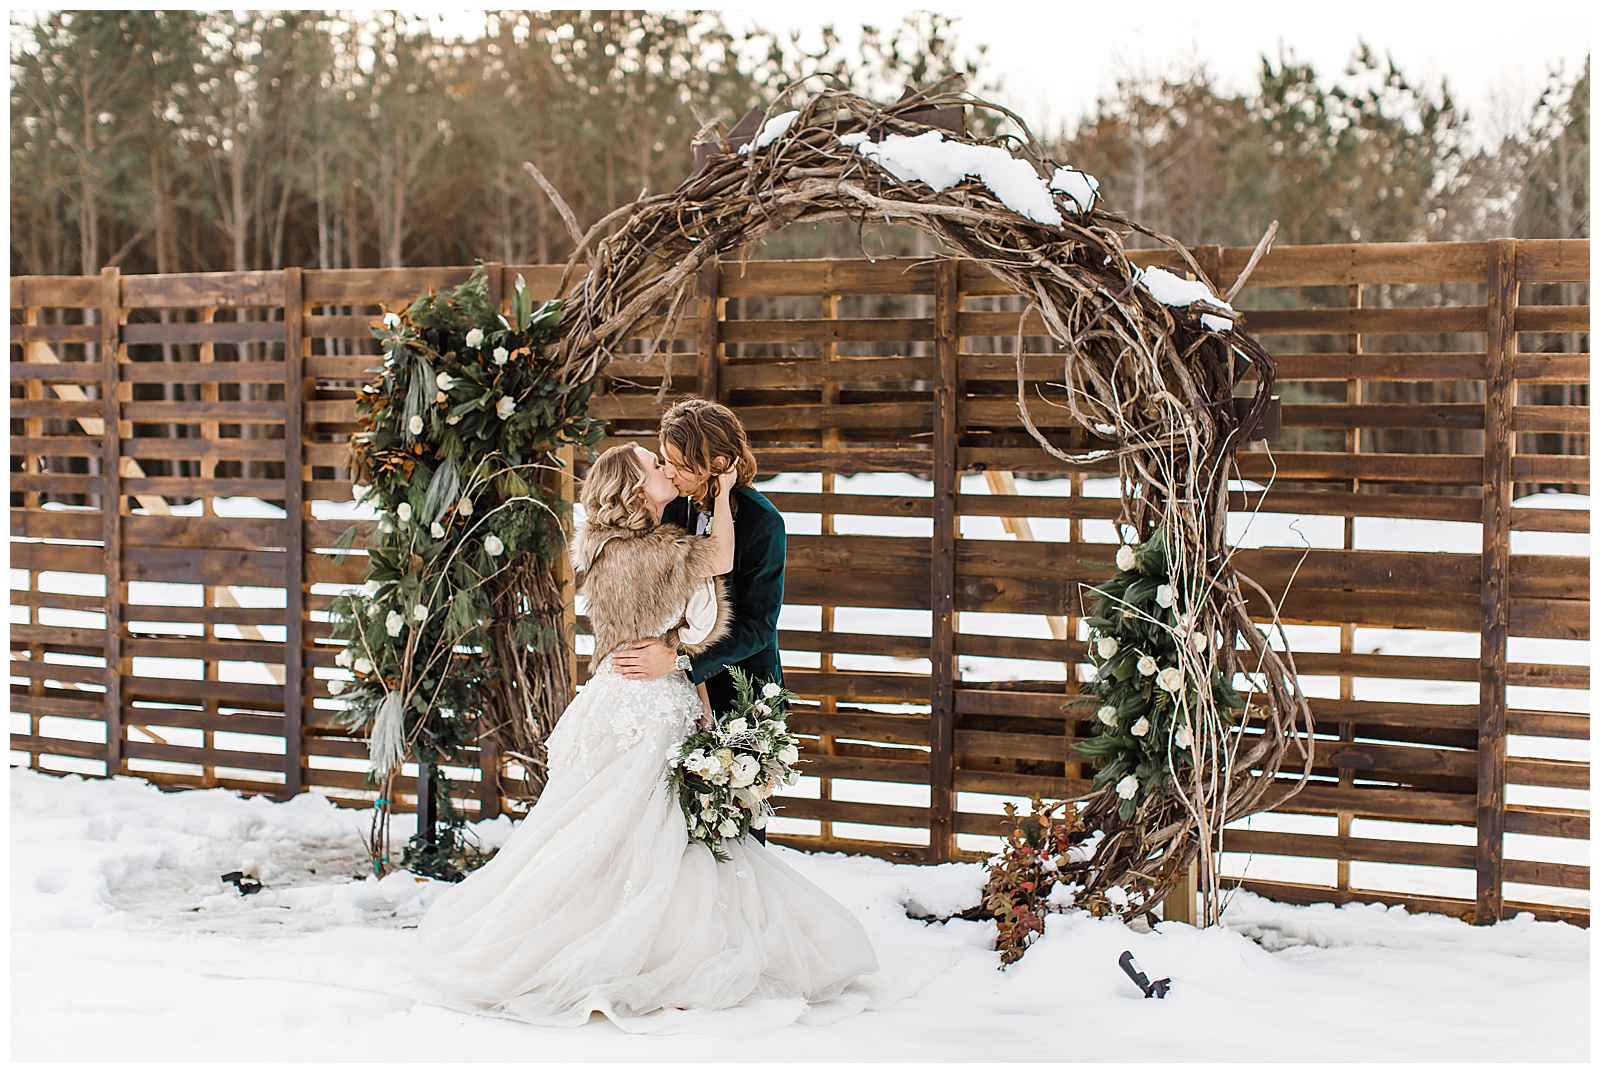 antebellum-of-new-kent-winter-wedding-inspiration-ch-sh-fredericks-photography_0034.jpg